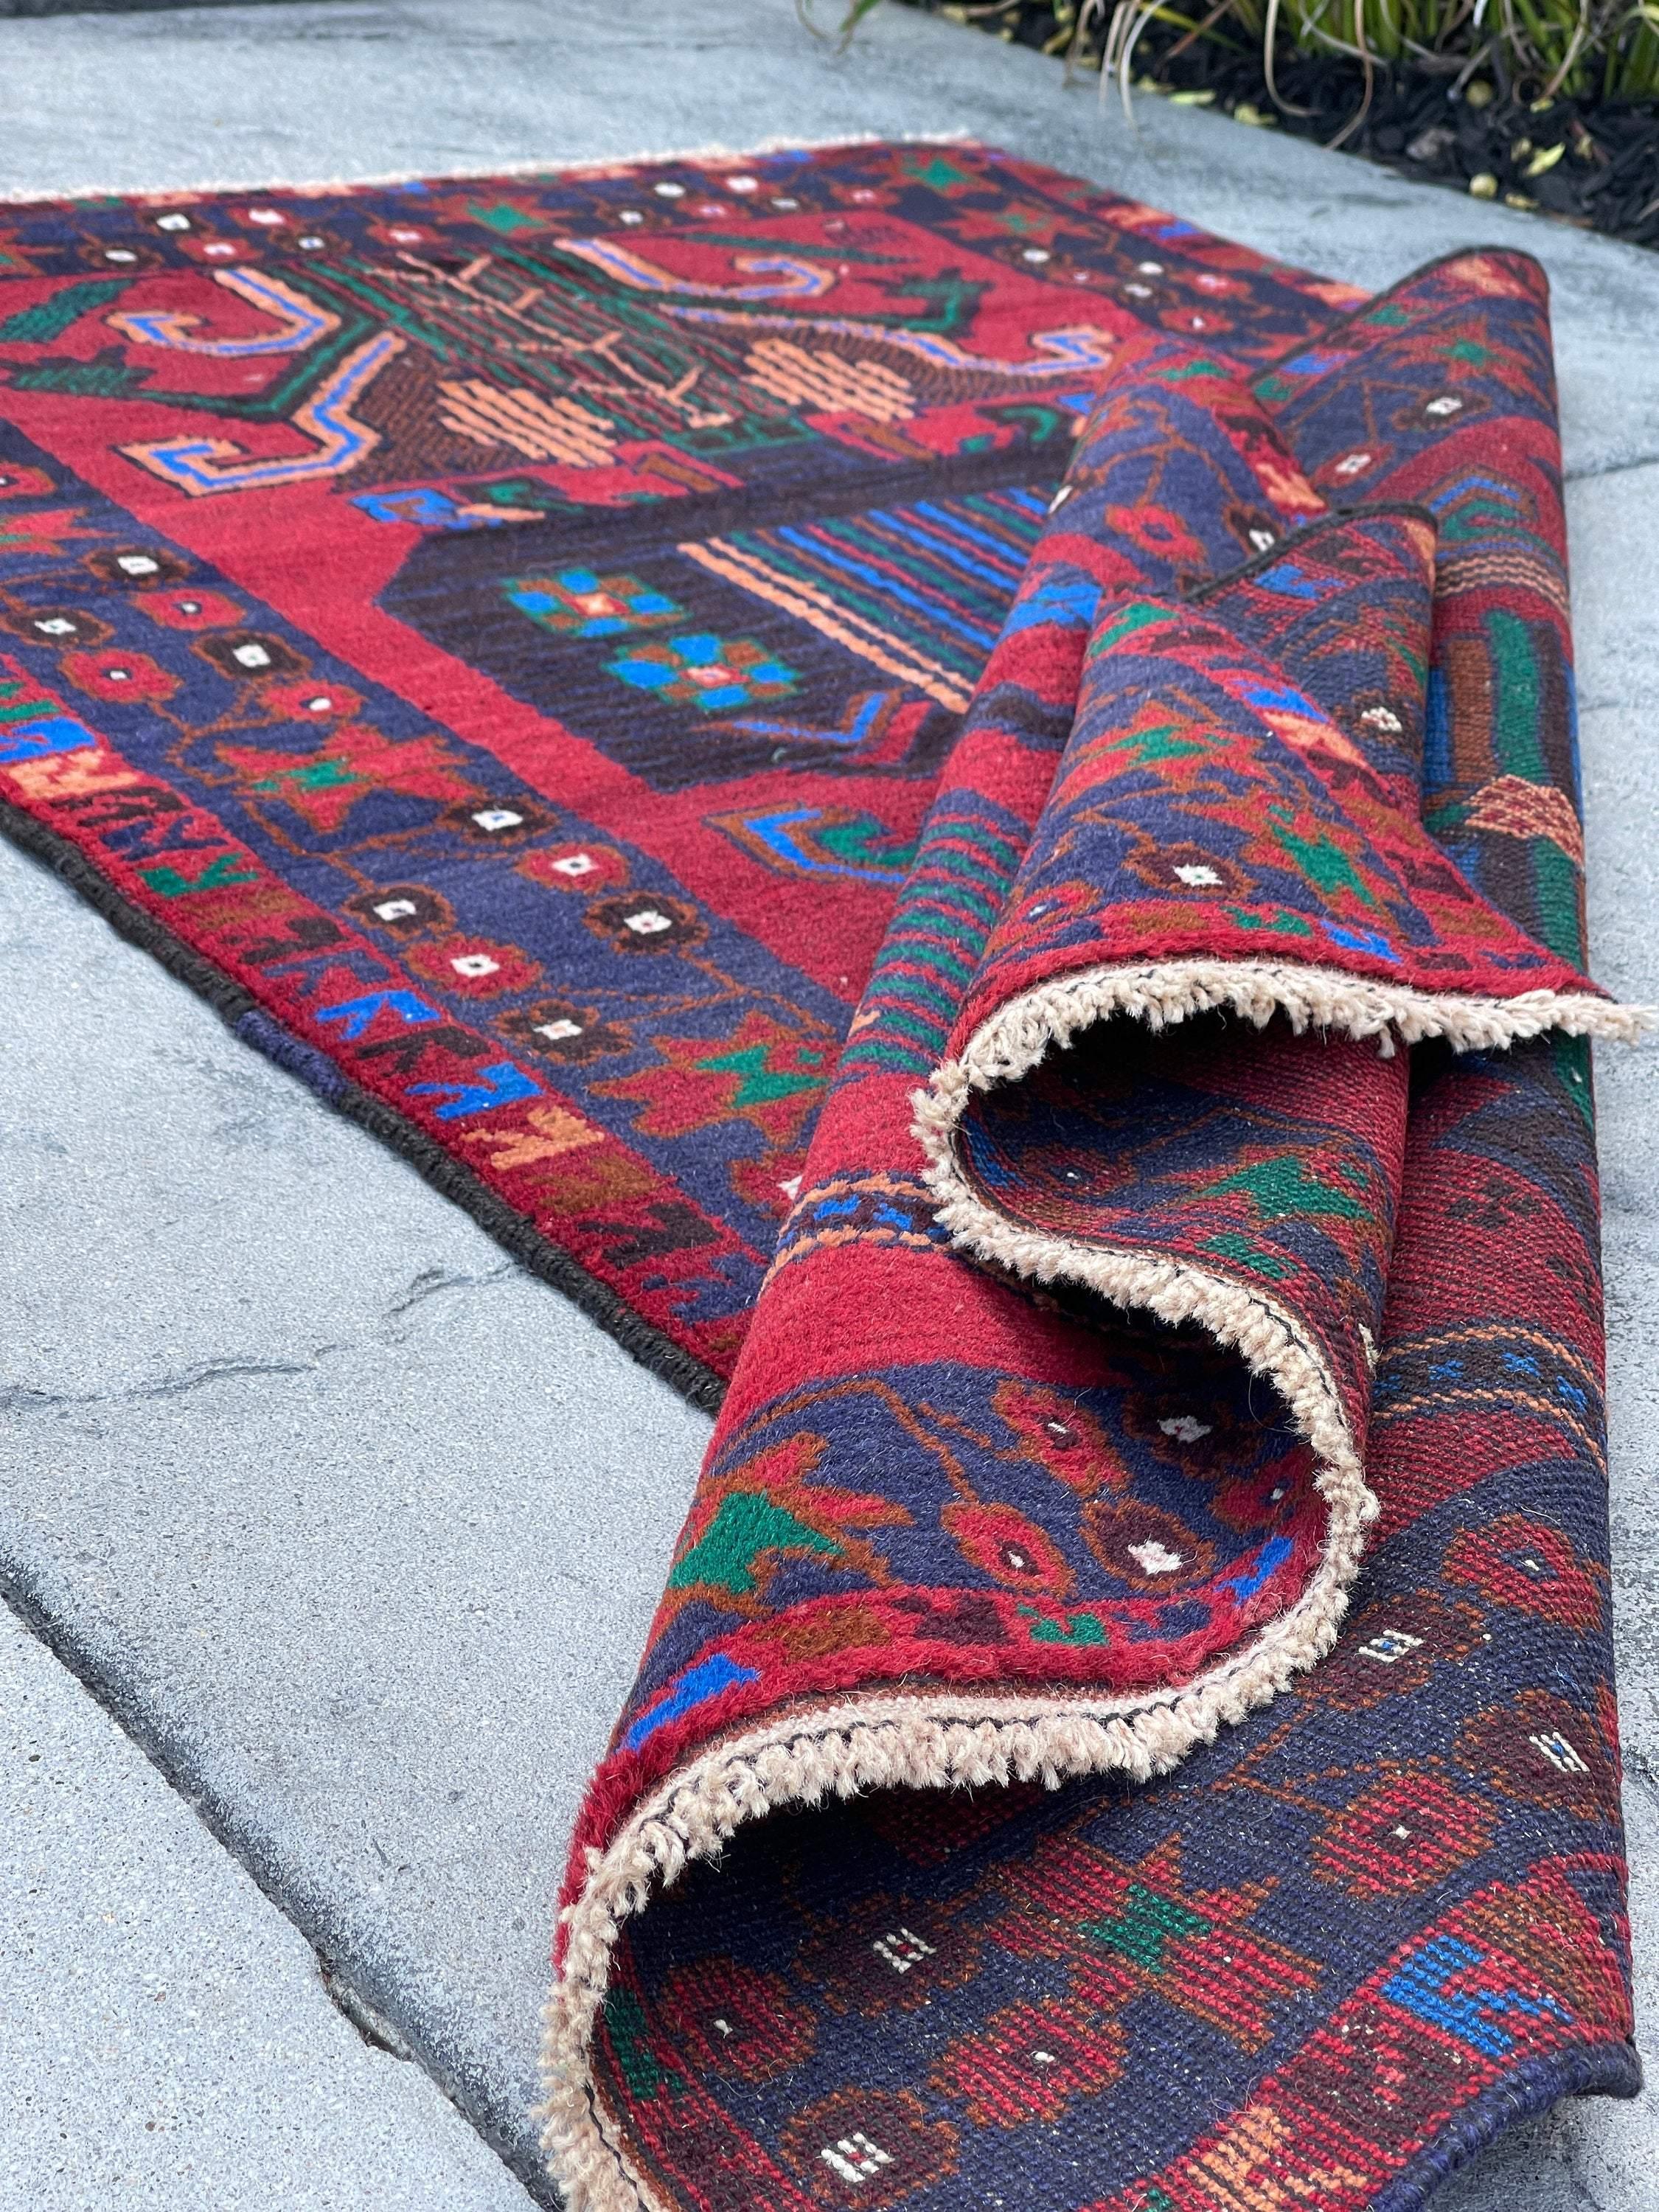 3x5 (90x150) Handmade Vintage Afghan Rug | Navy Royal Blue Red Brown Orange Green| Nomadic Baluch Boho Bohemian Tribal Turkish Moroccan Wool